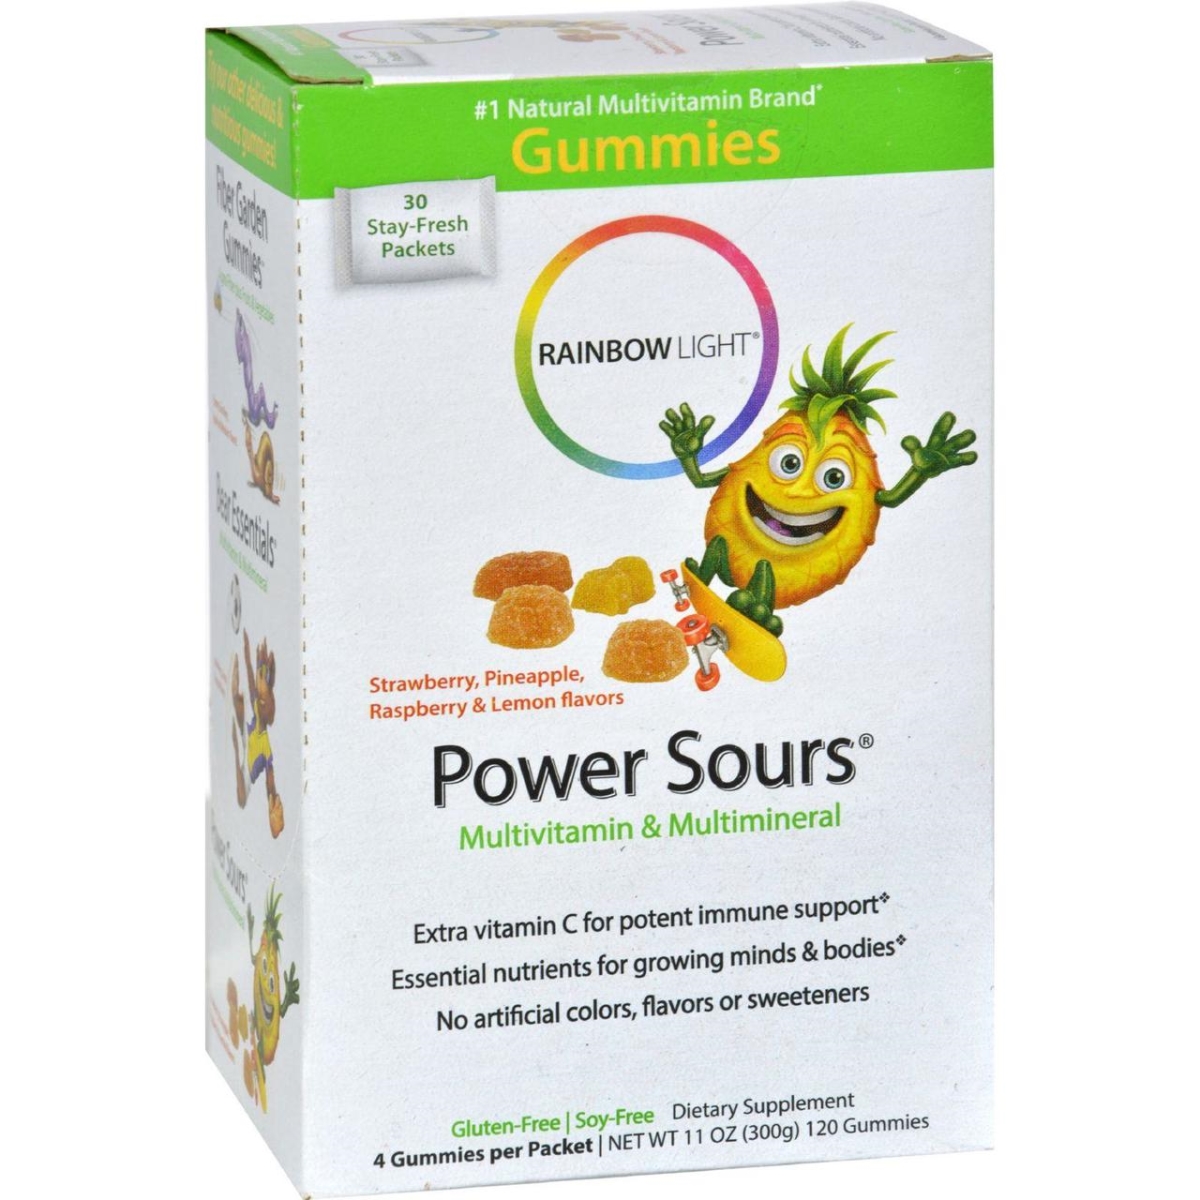 Hg0826073 Gummy Power Sours Multivitamin & Multimineral Sour Fruit - 30 Single Serve Packets